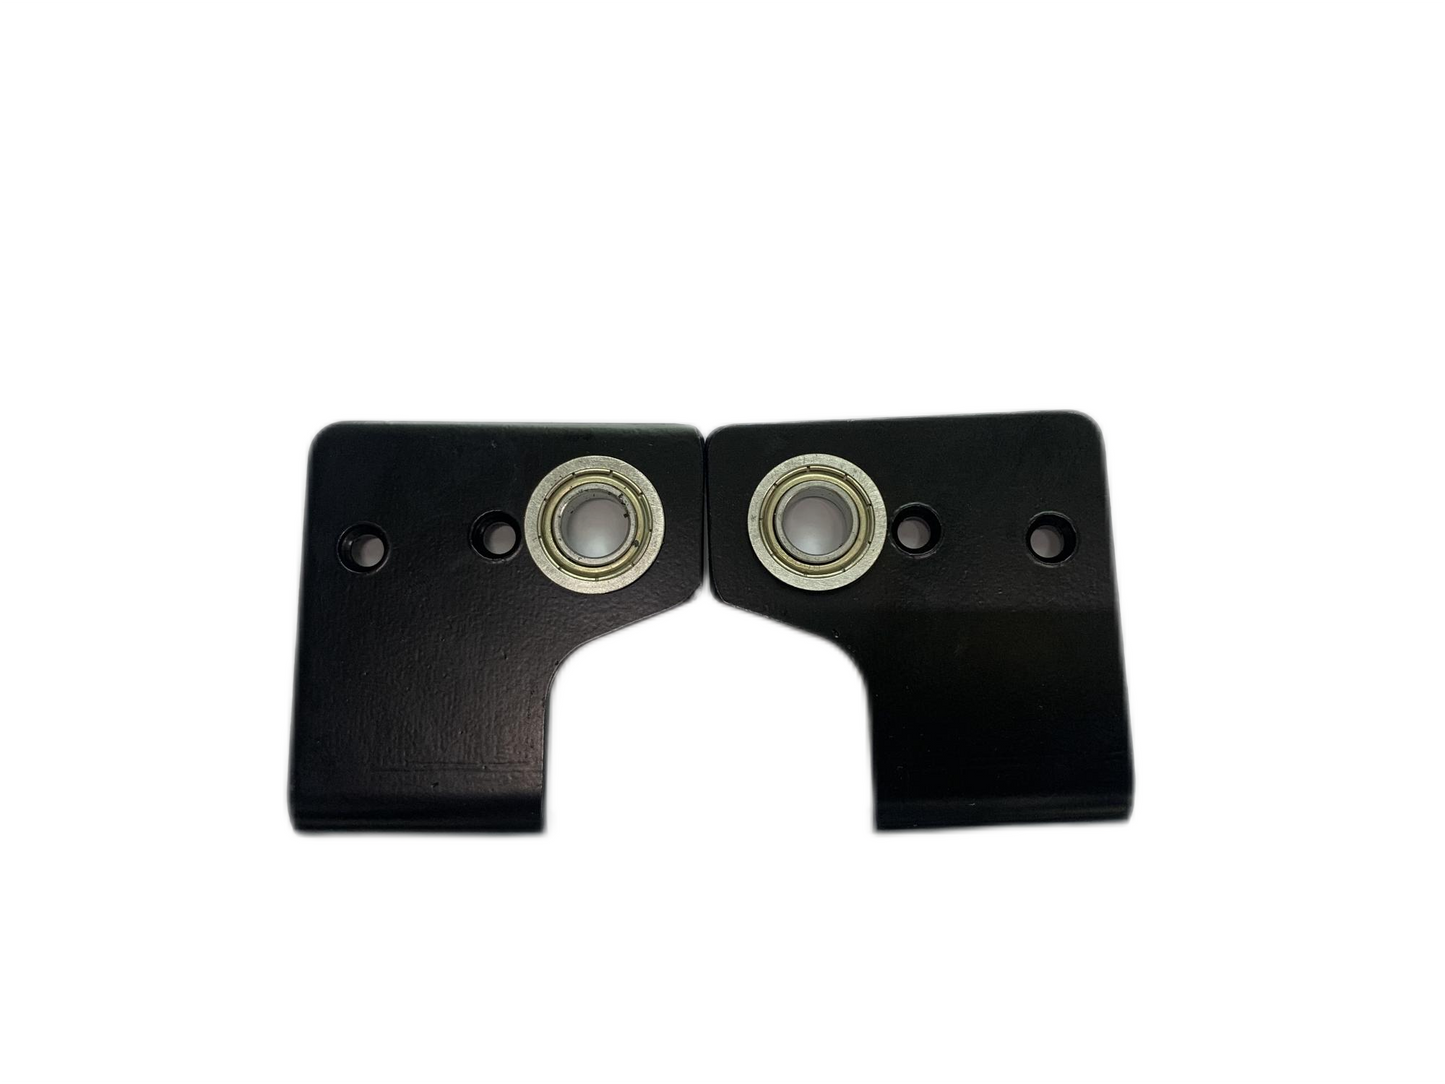 （Pre-sale）Monorim LR01 Turn signal & Projection Decorative Light for Segway Ninebot Max G30 D, Scooter Blinker